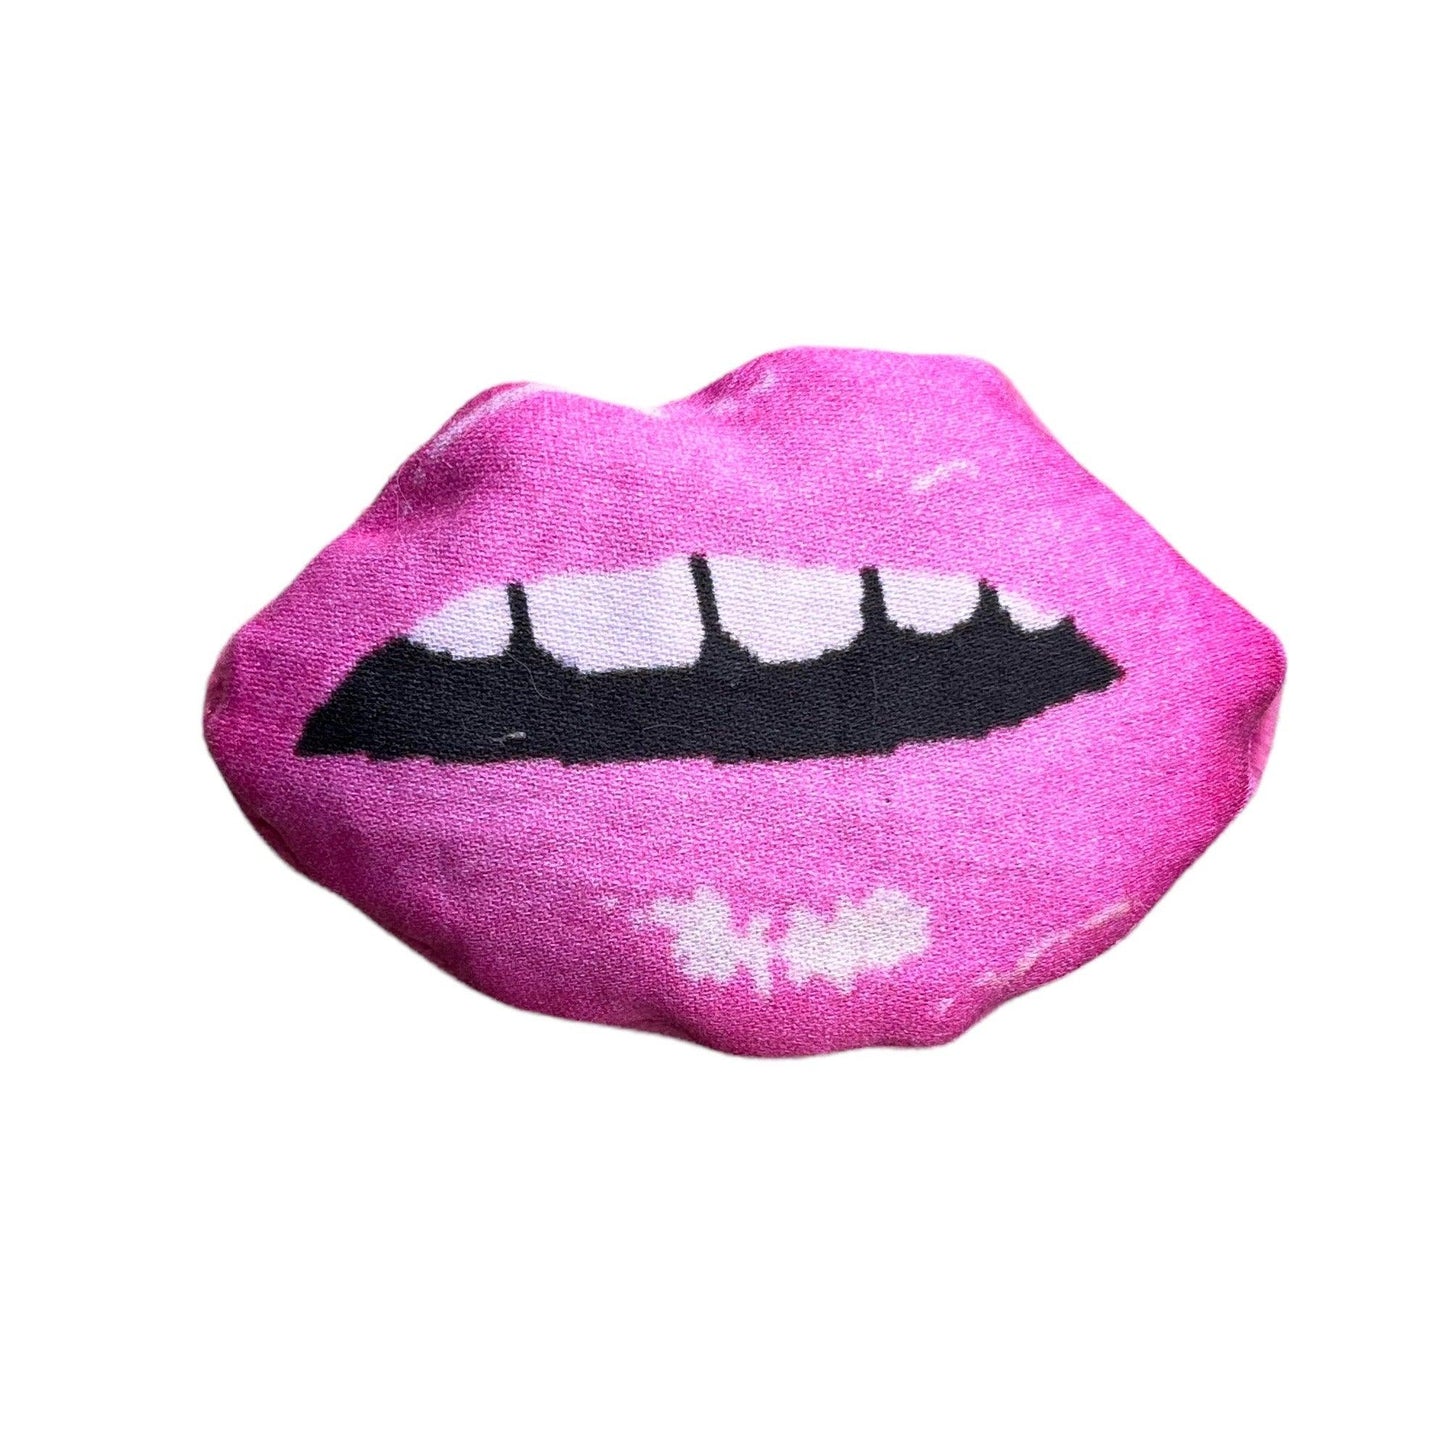 pink lips-shaped lavender sachet